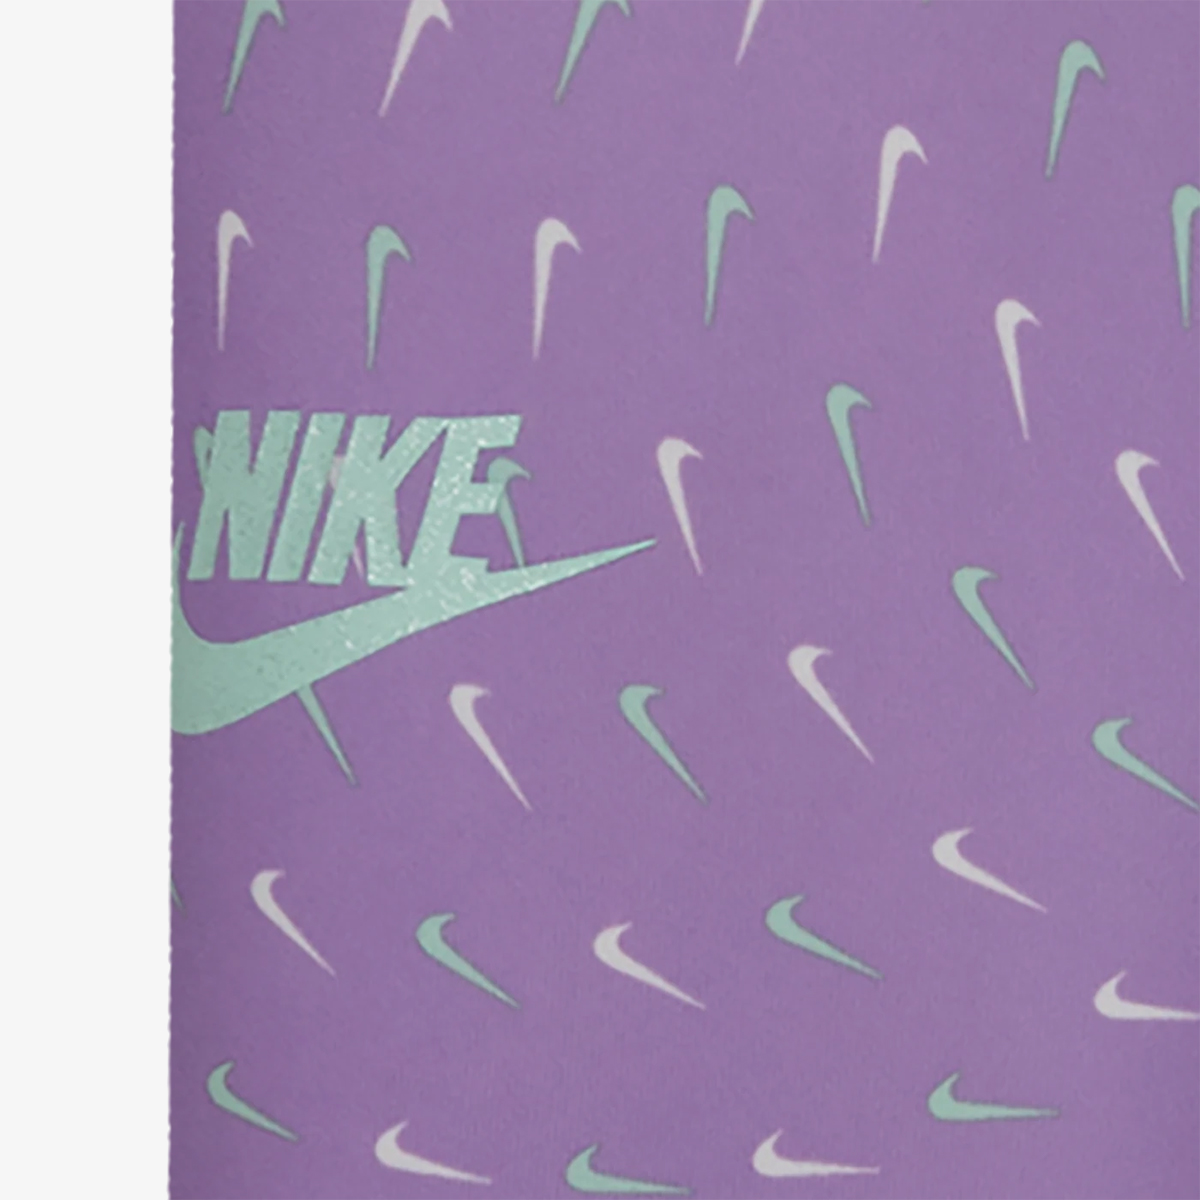 Nike Essentials 